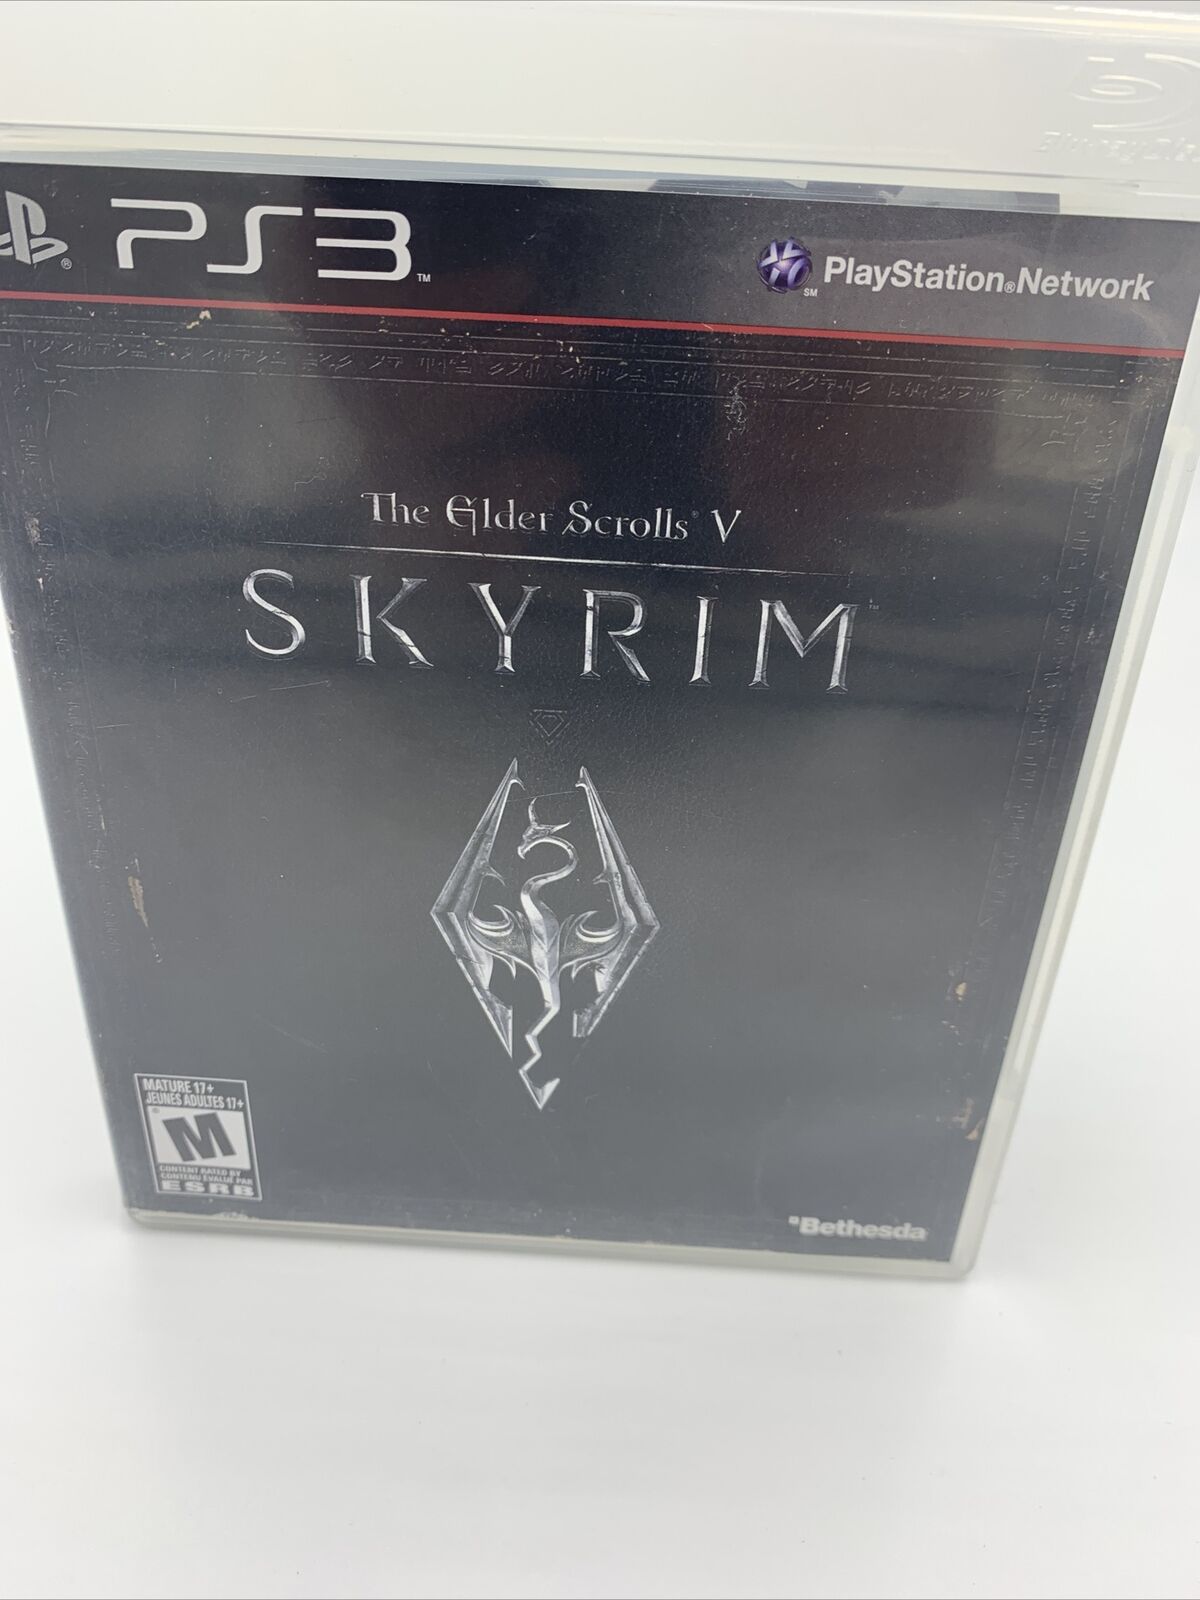 The Elder Scrolls V: Skyrim (PlayStation 3, 2011)